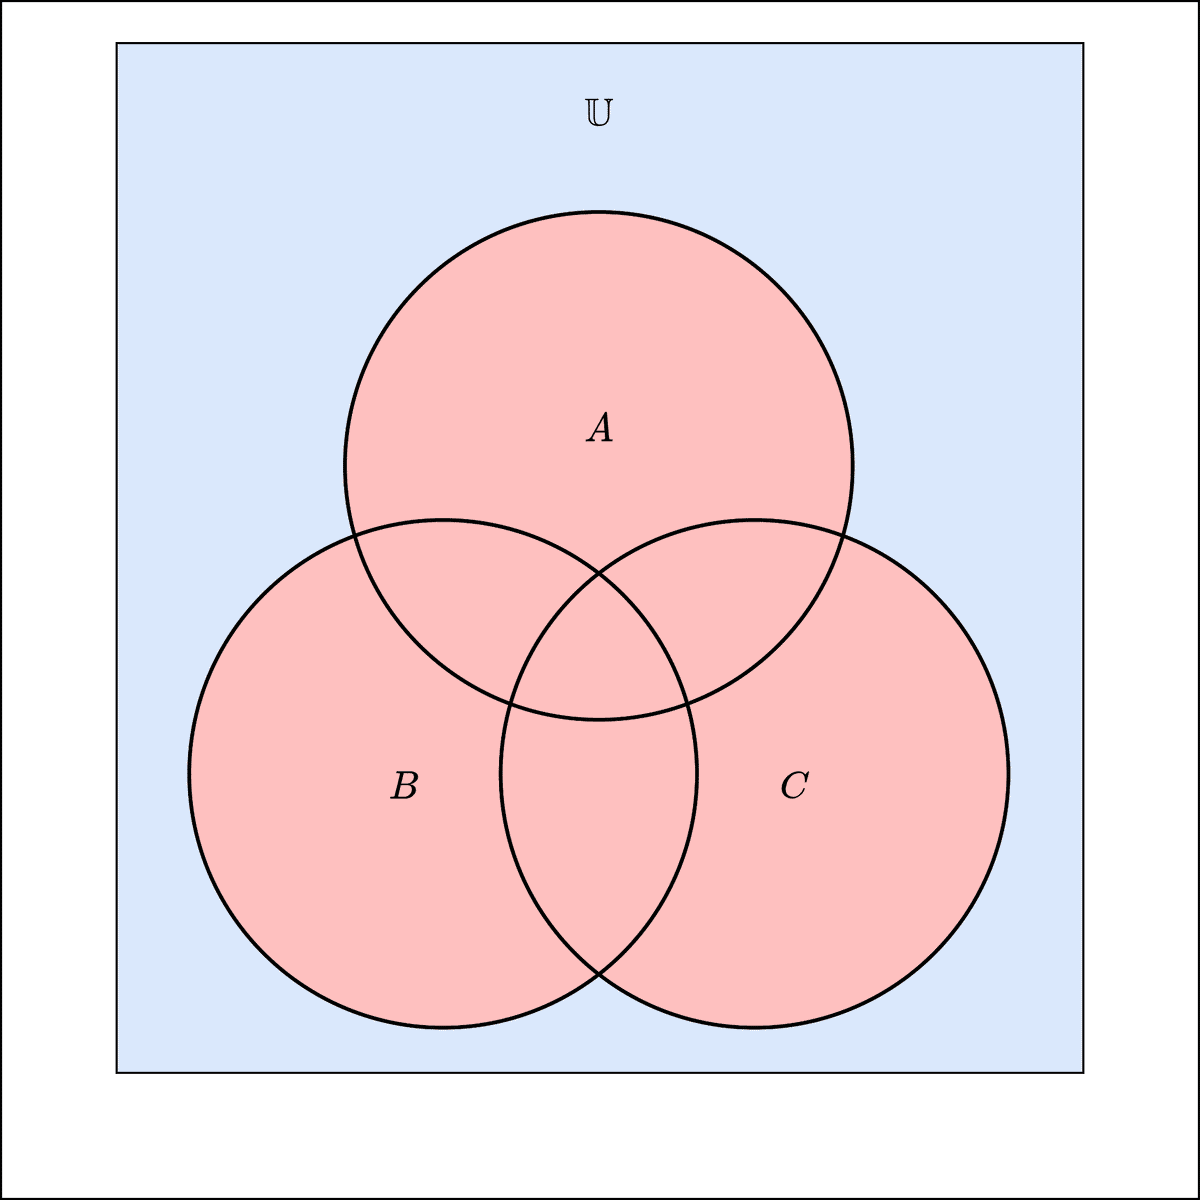 Venn diagram for the union of three sets